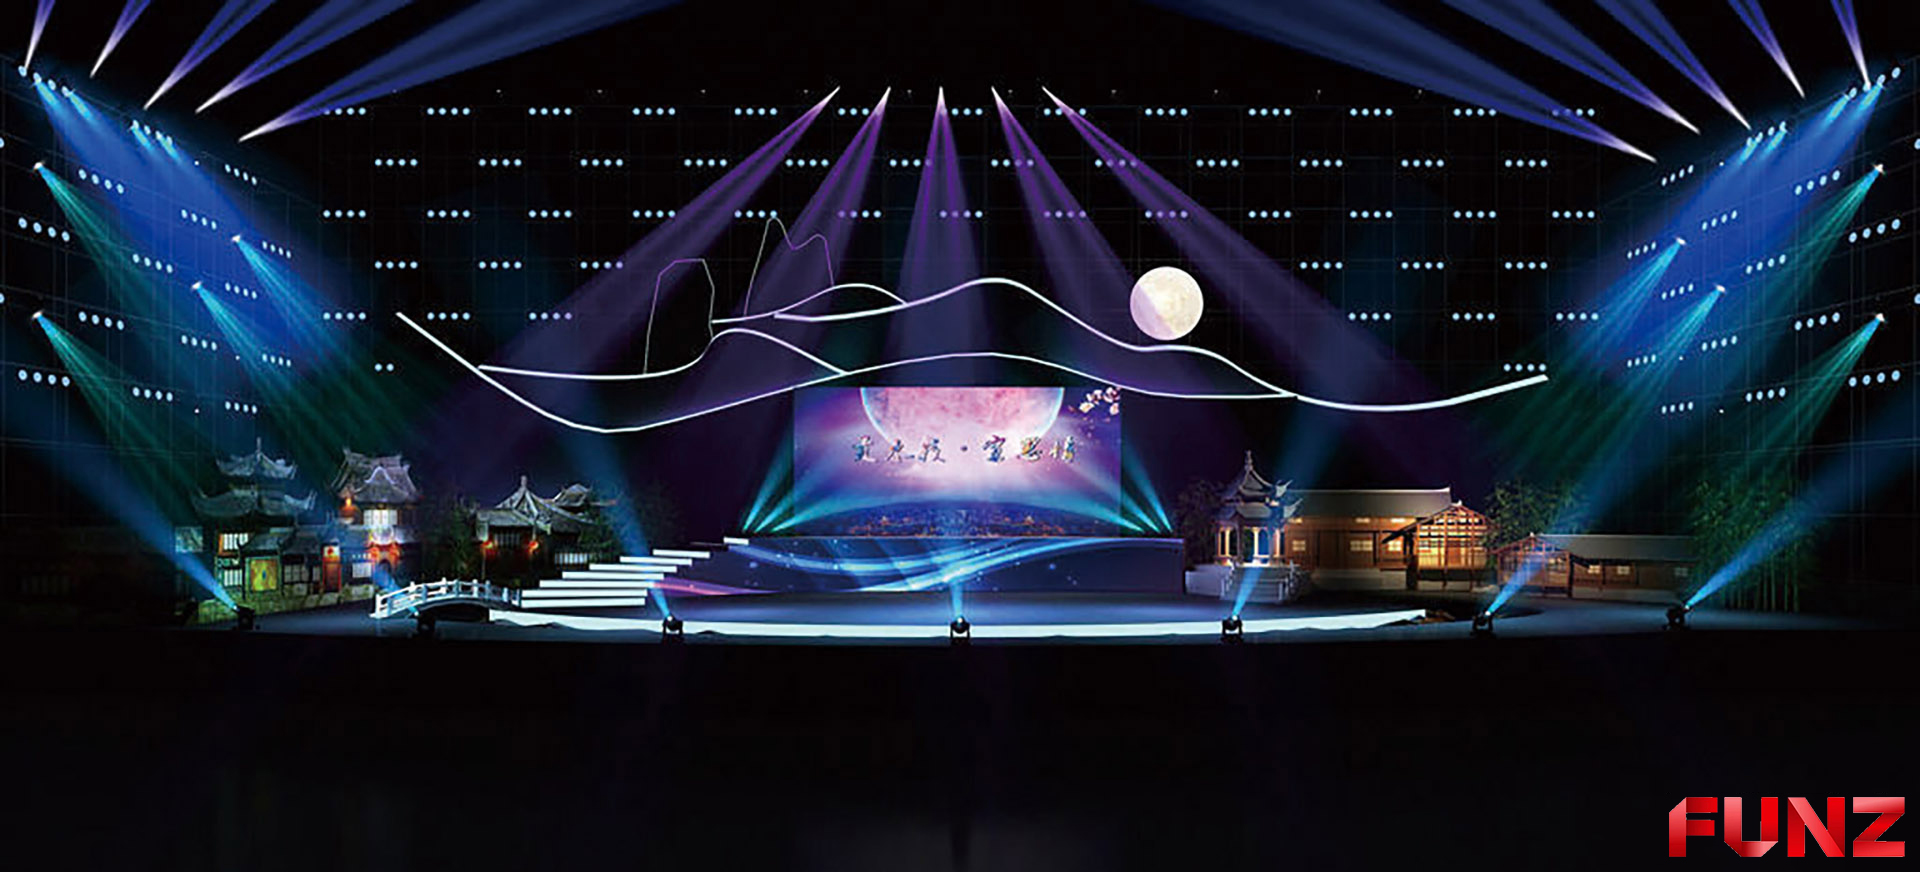 3ds-max-2014-stage-concert-40-3d-model.jpg